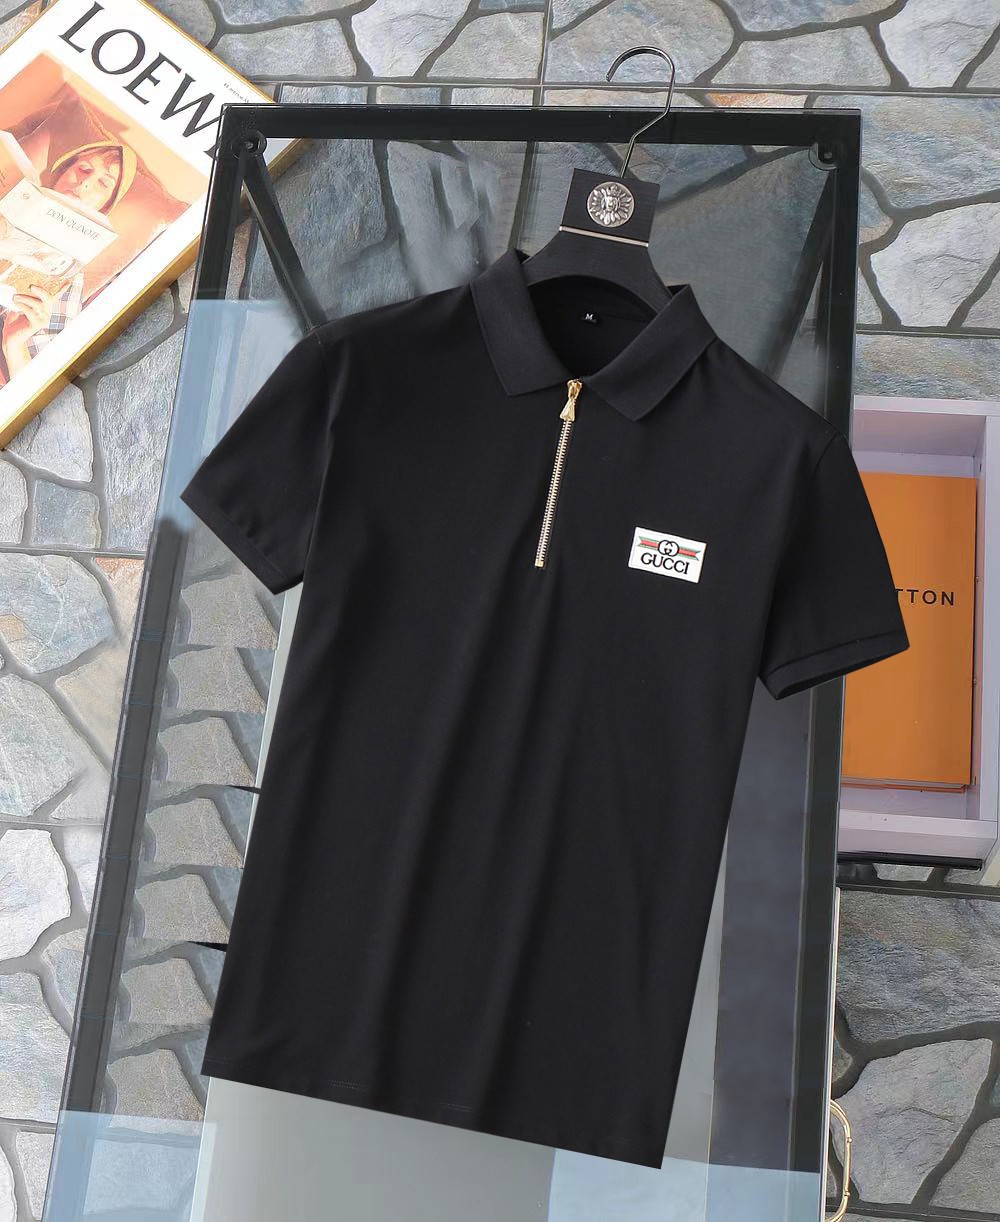 Gucci Clothing Polo T-Shirt Short Sleeve